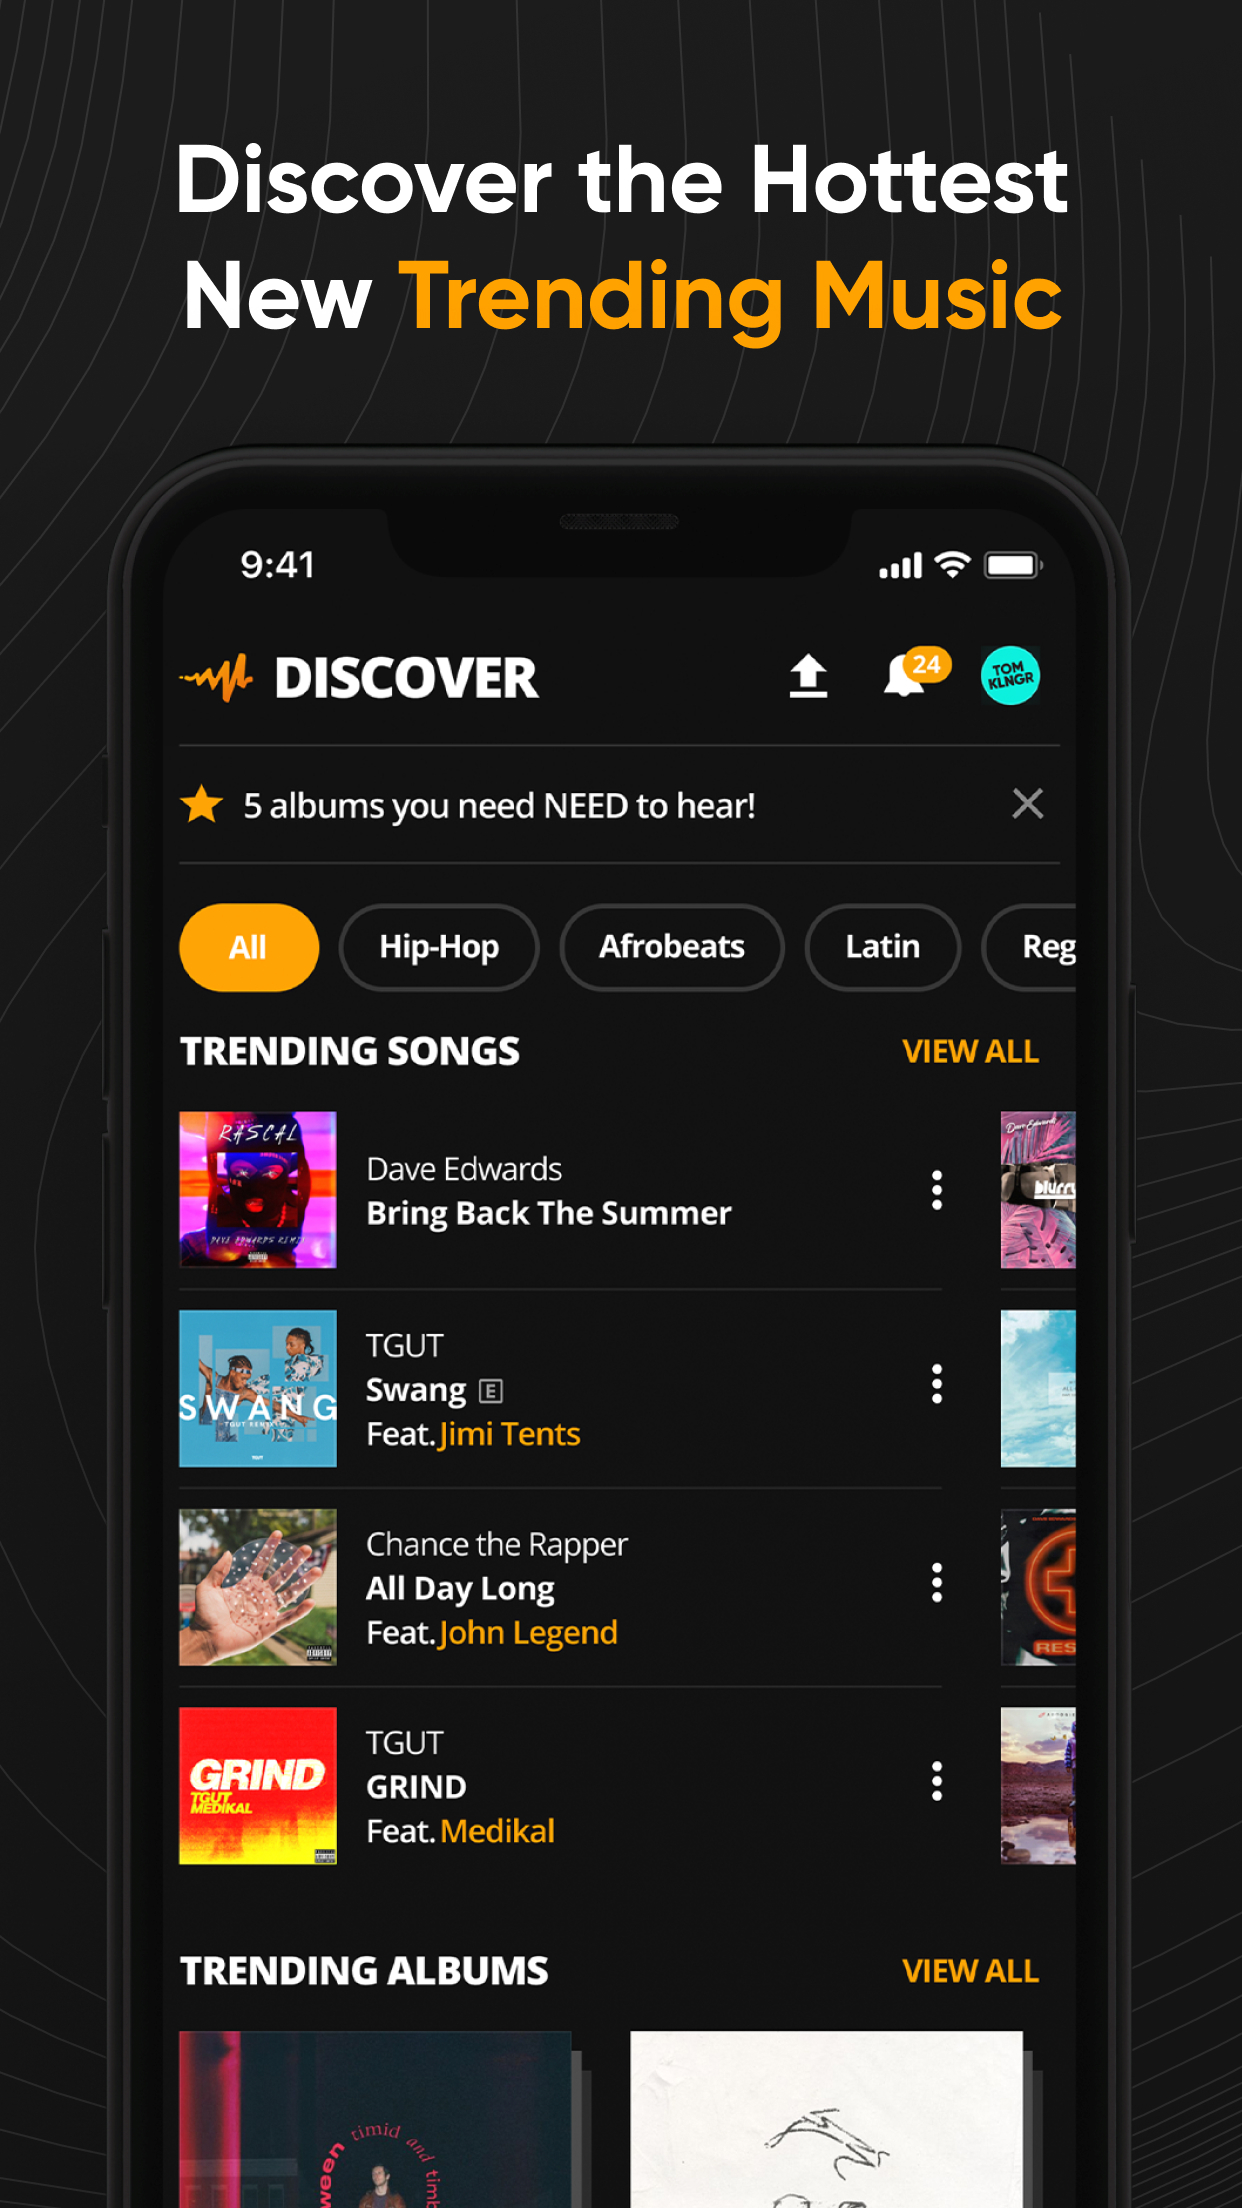 Android application Audiomack: Music Downloader screenshort